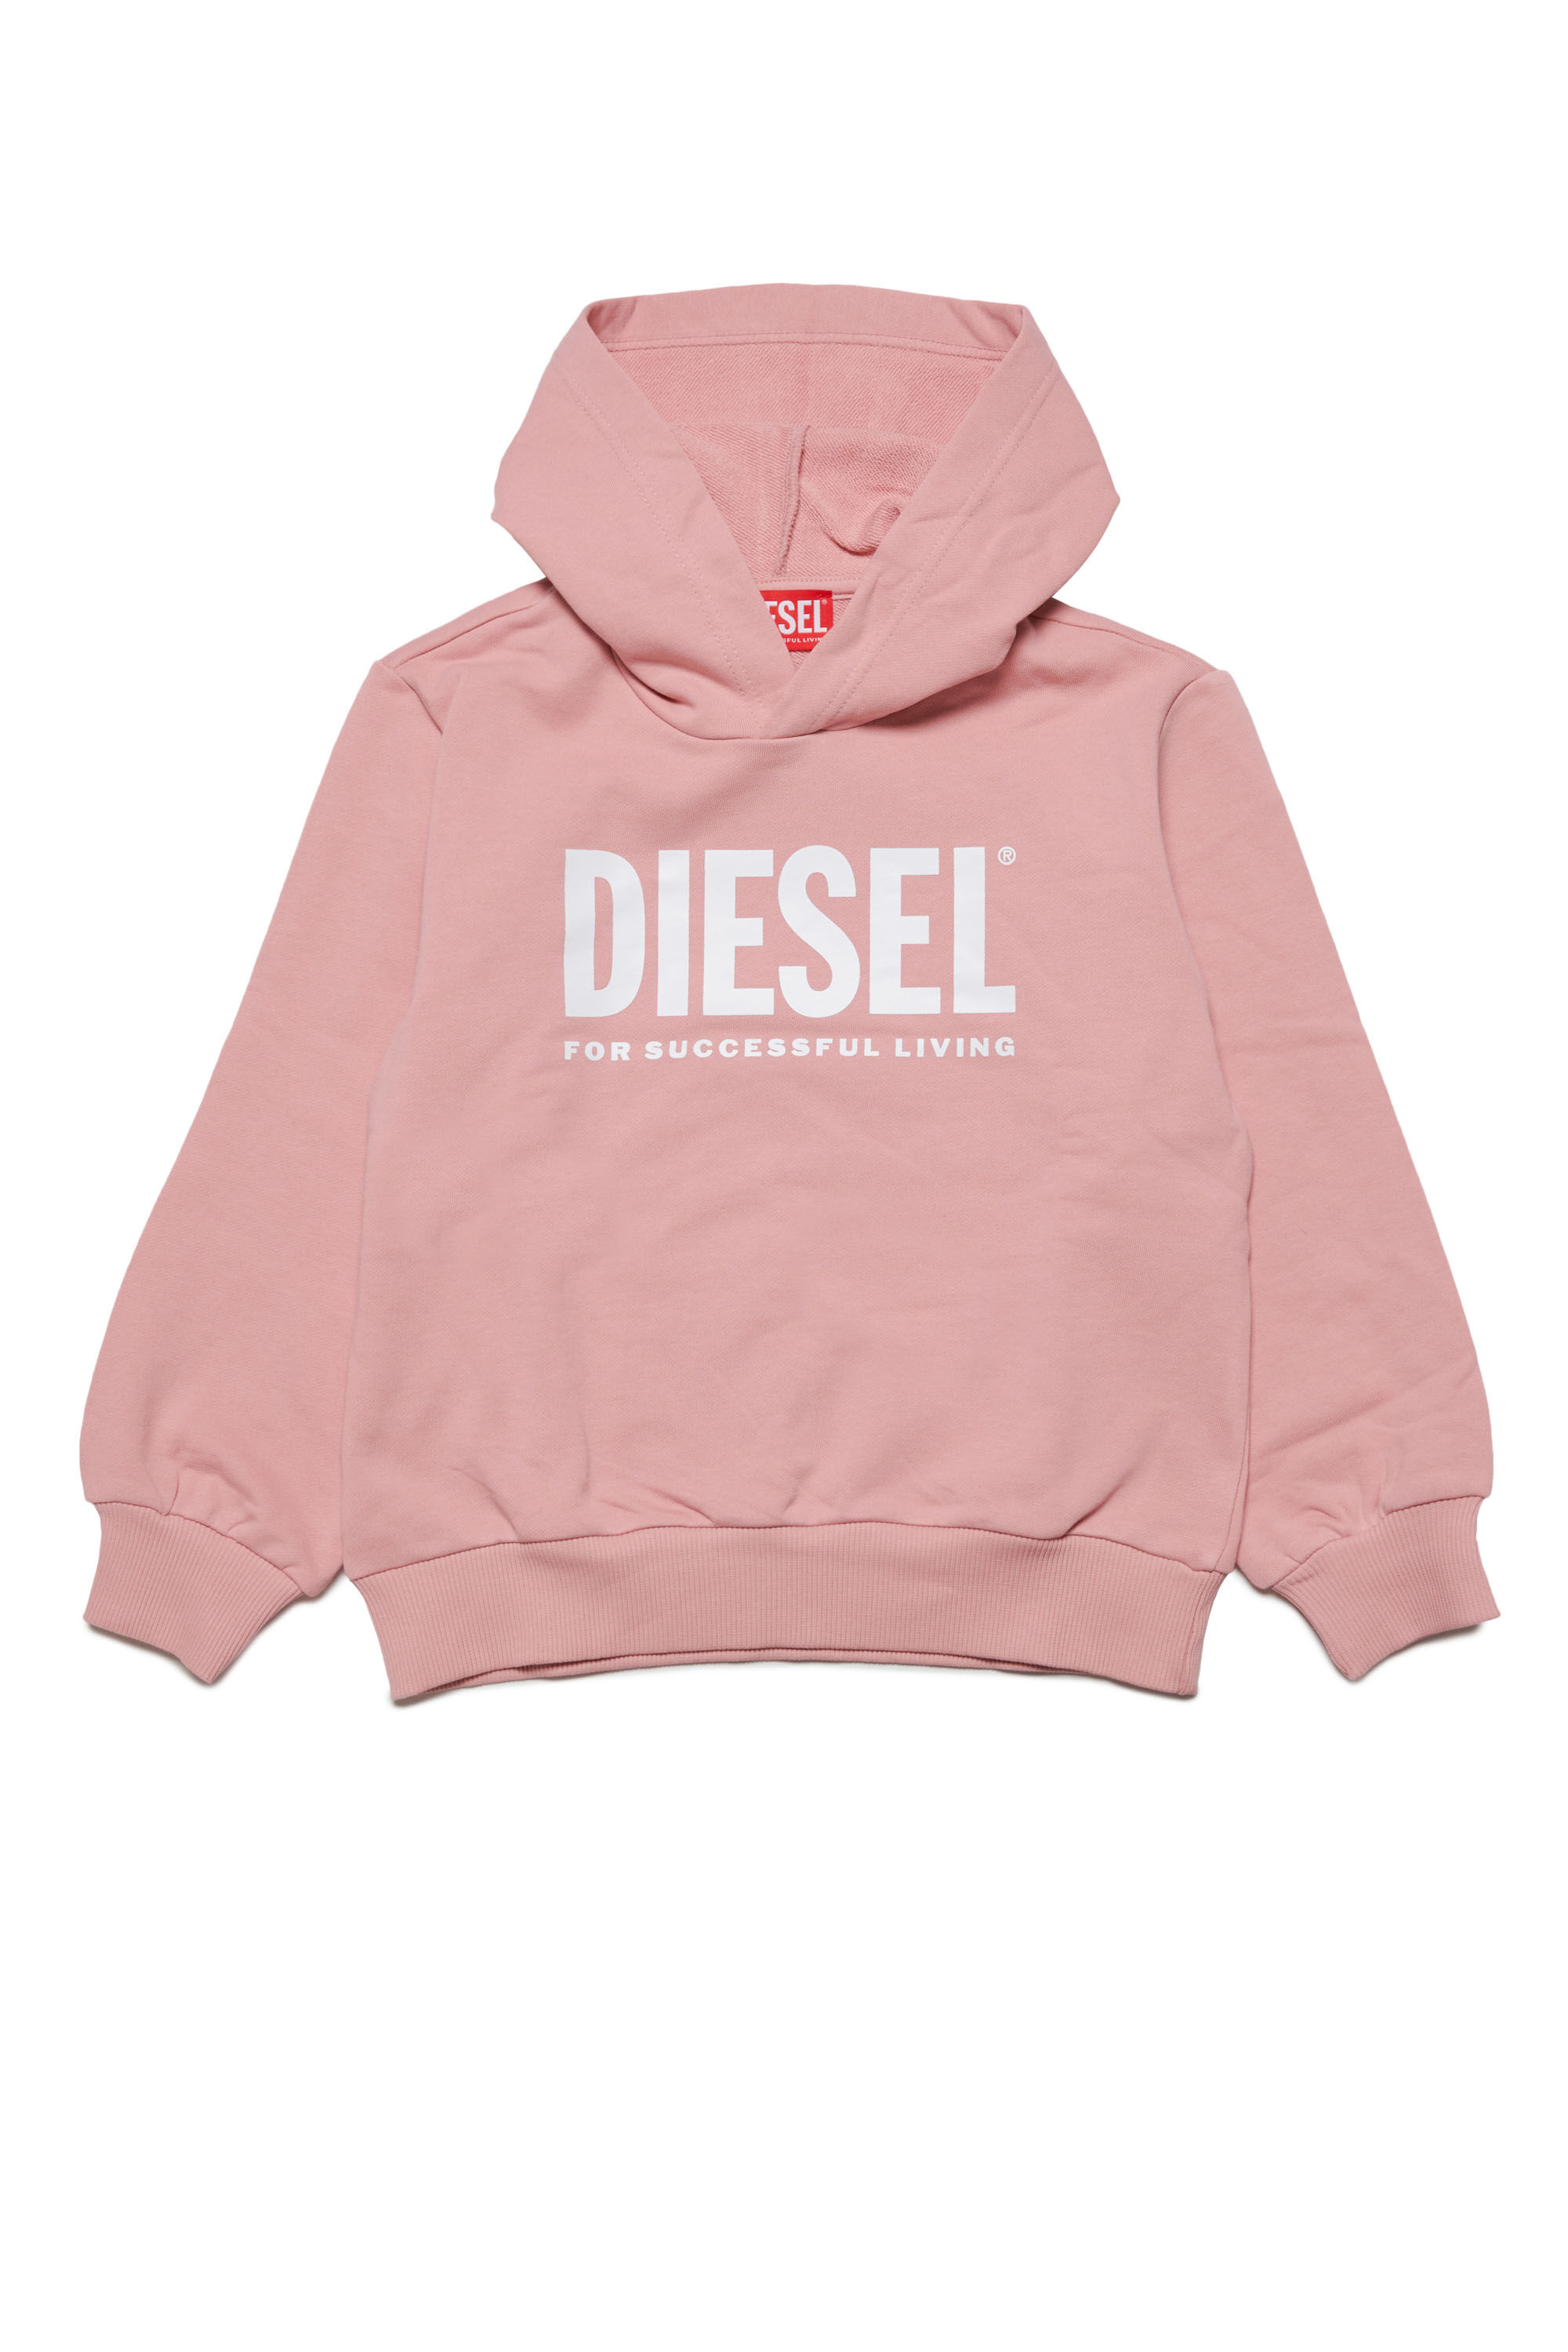 Diesel - LSFORT DI OVER HOOD, Pink - Image 1